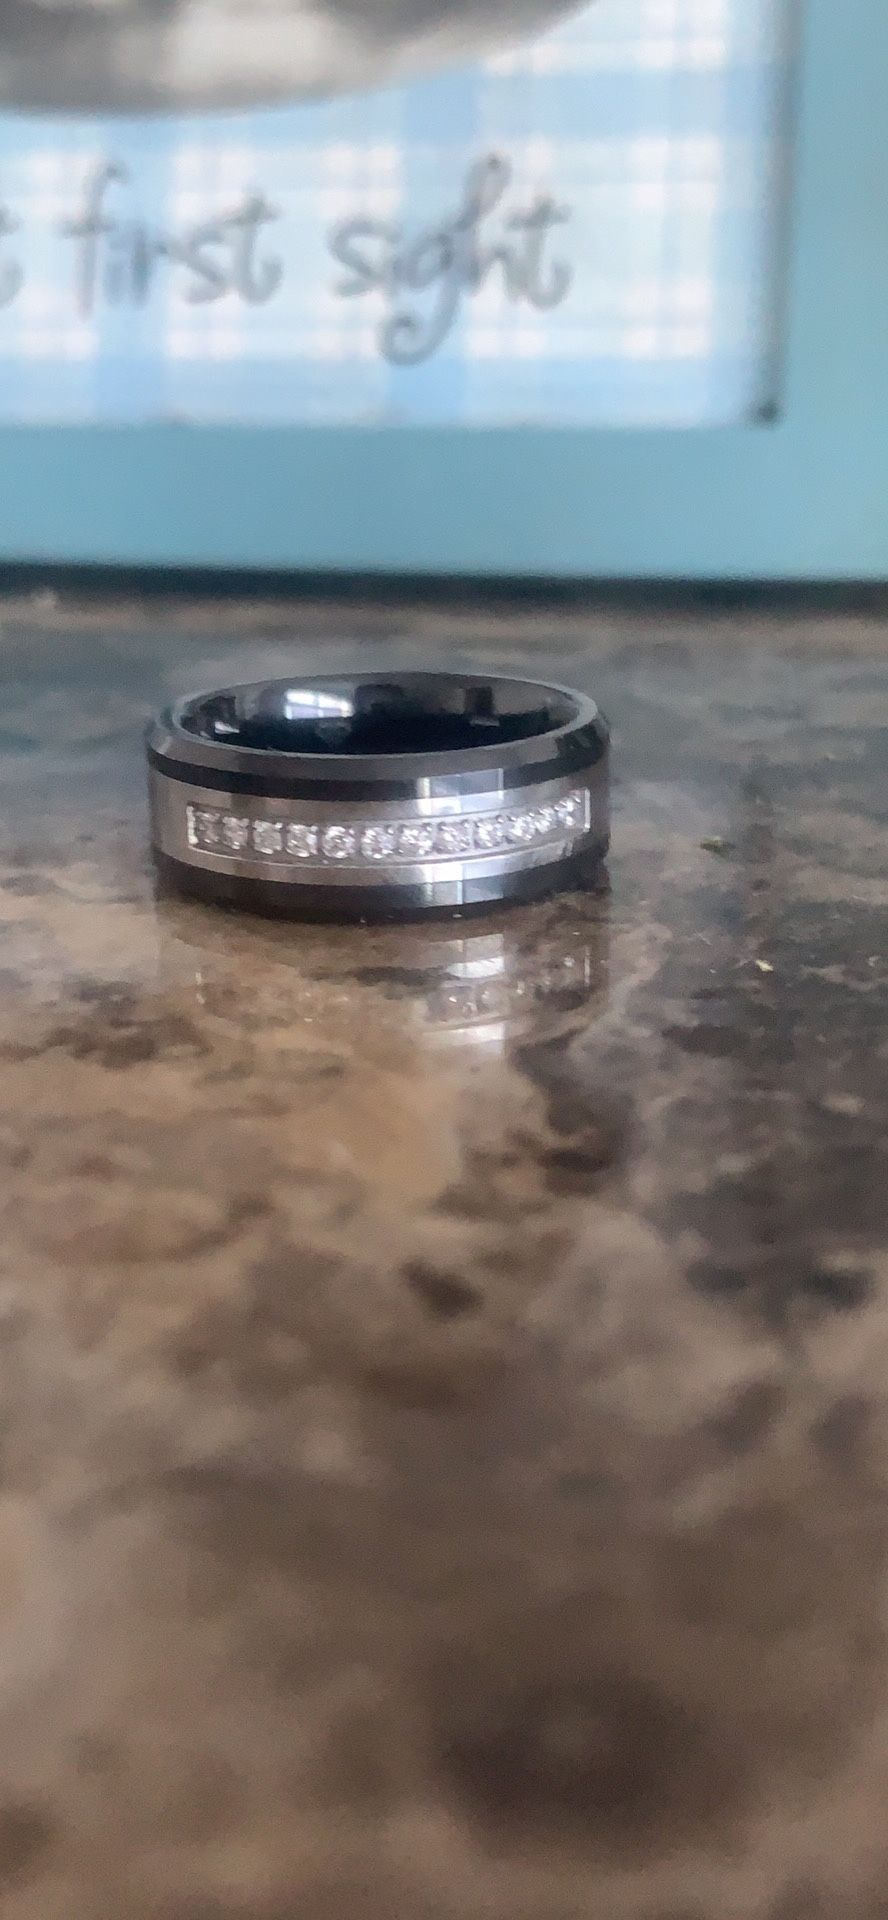 Men’s wedding ring, 8mm ceramic stainless steel size 8 1/6ct diamonds.